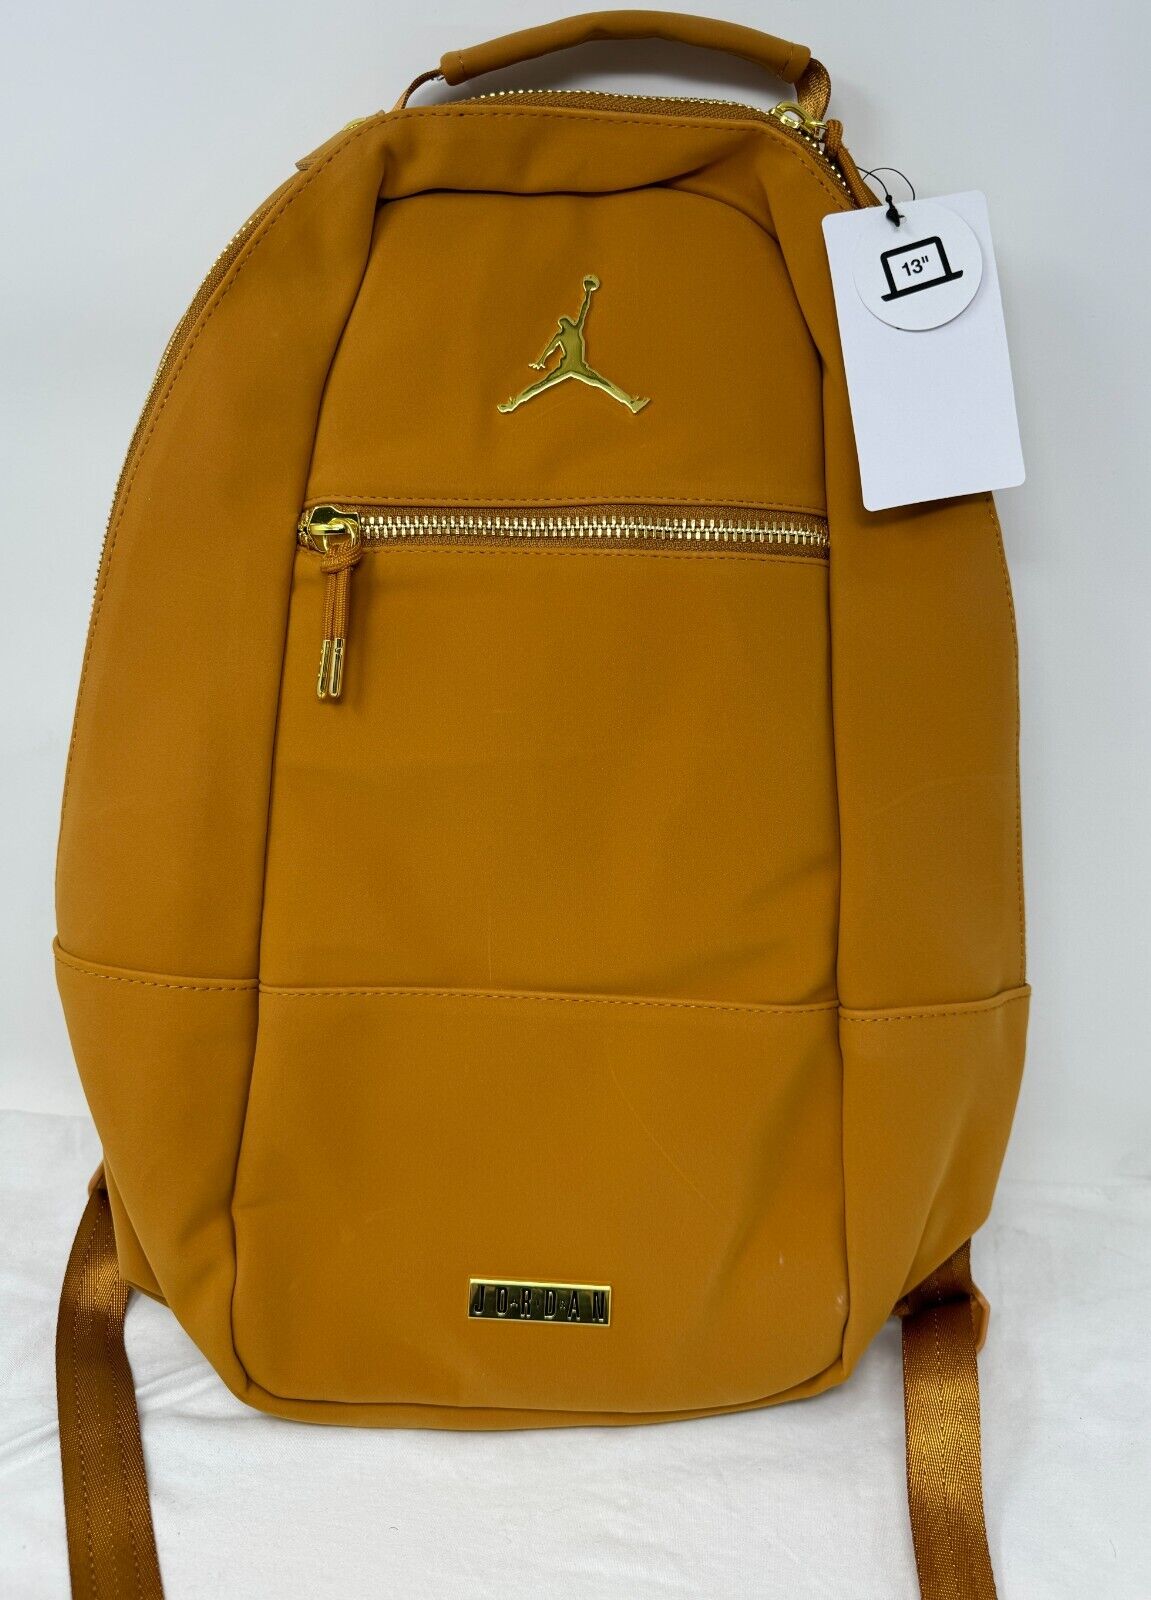 Nike Air Jordan Leather 9A0227 X3N Desert Ochre Brown Tan Backpack Laptop Bag